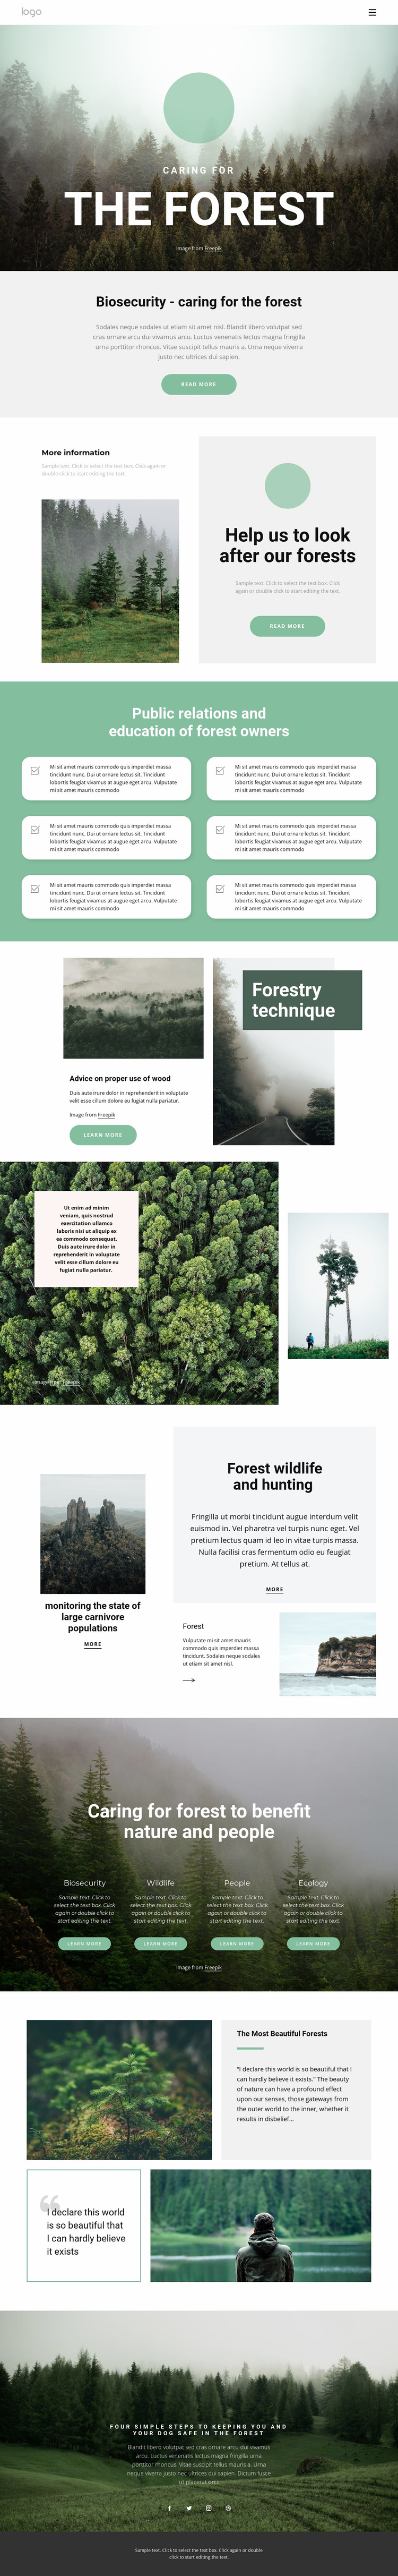 Caring for parks and forests Website Design